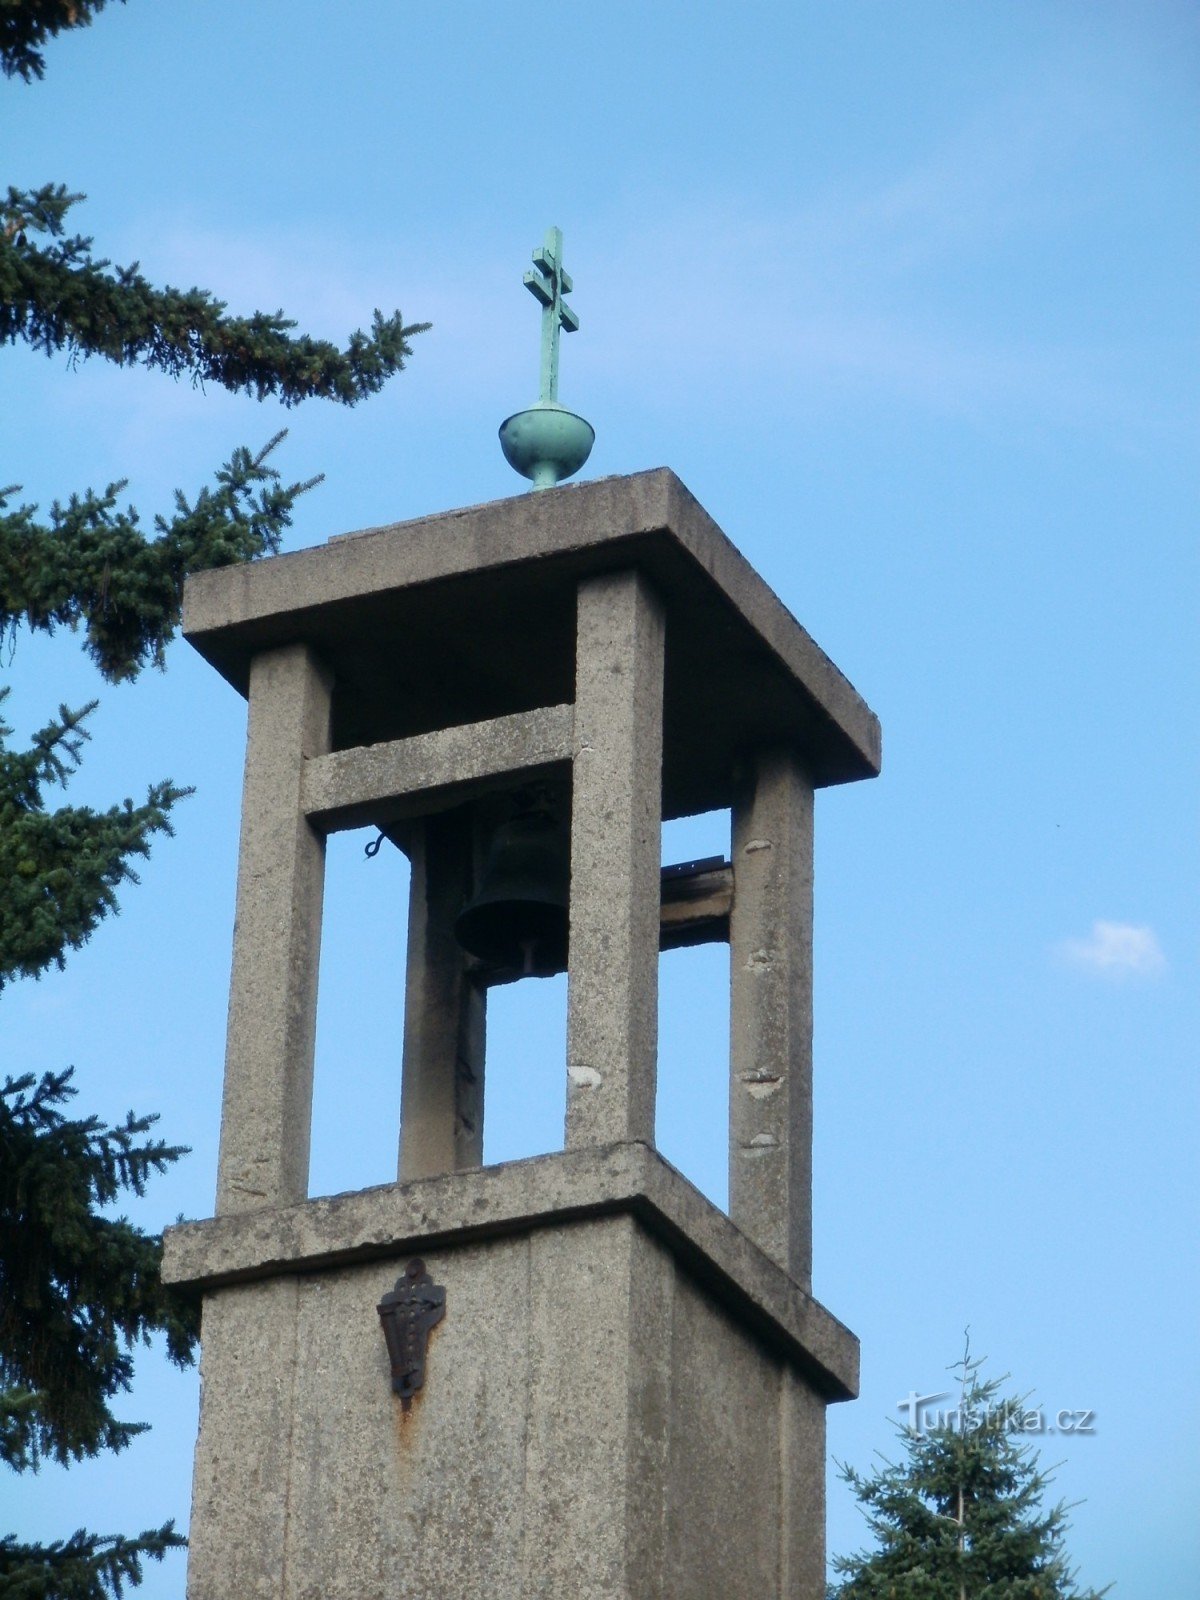 Hradec Králové - bell tower at Pouchov